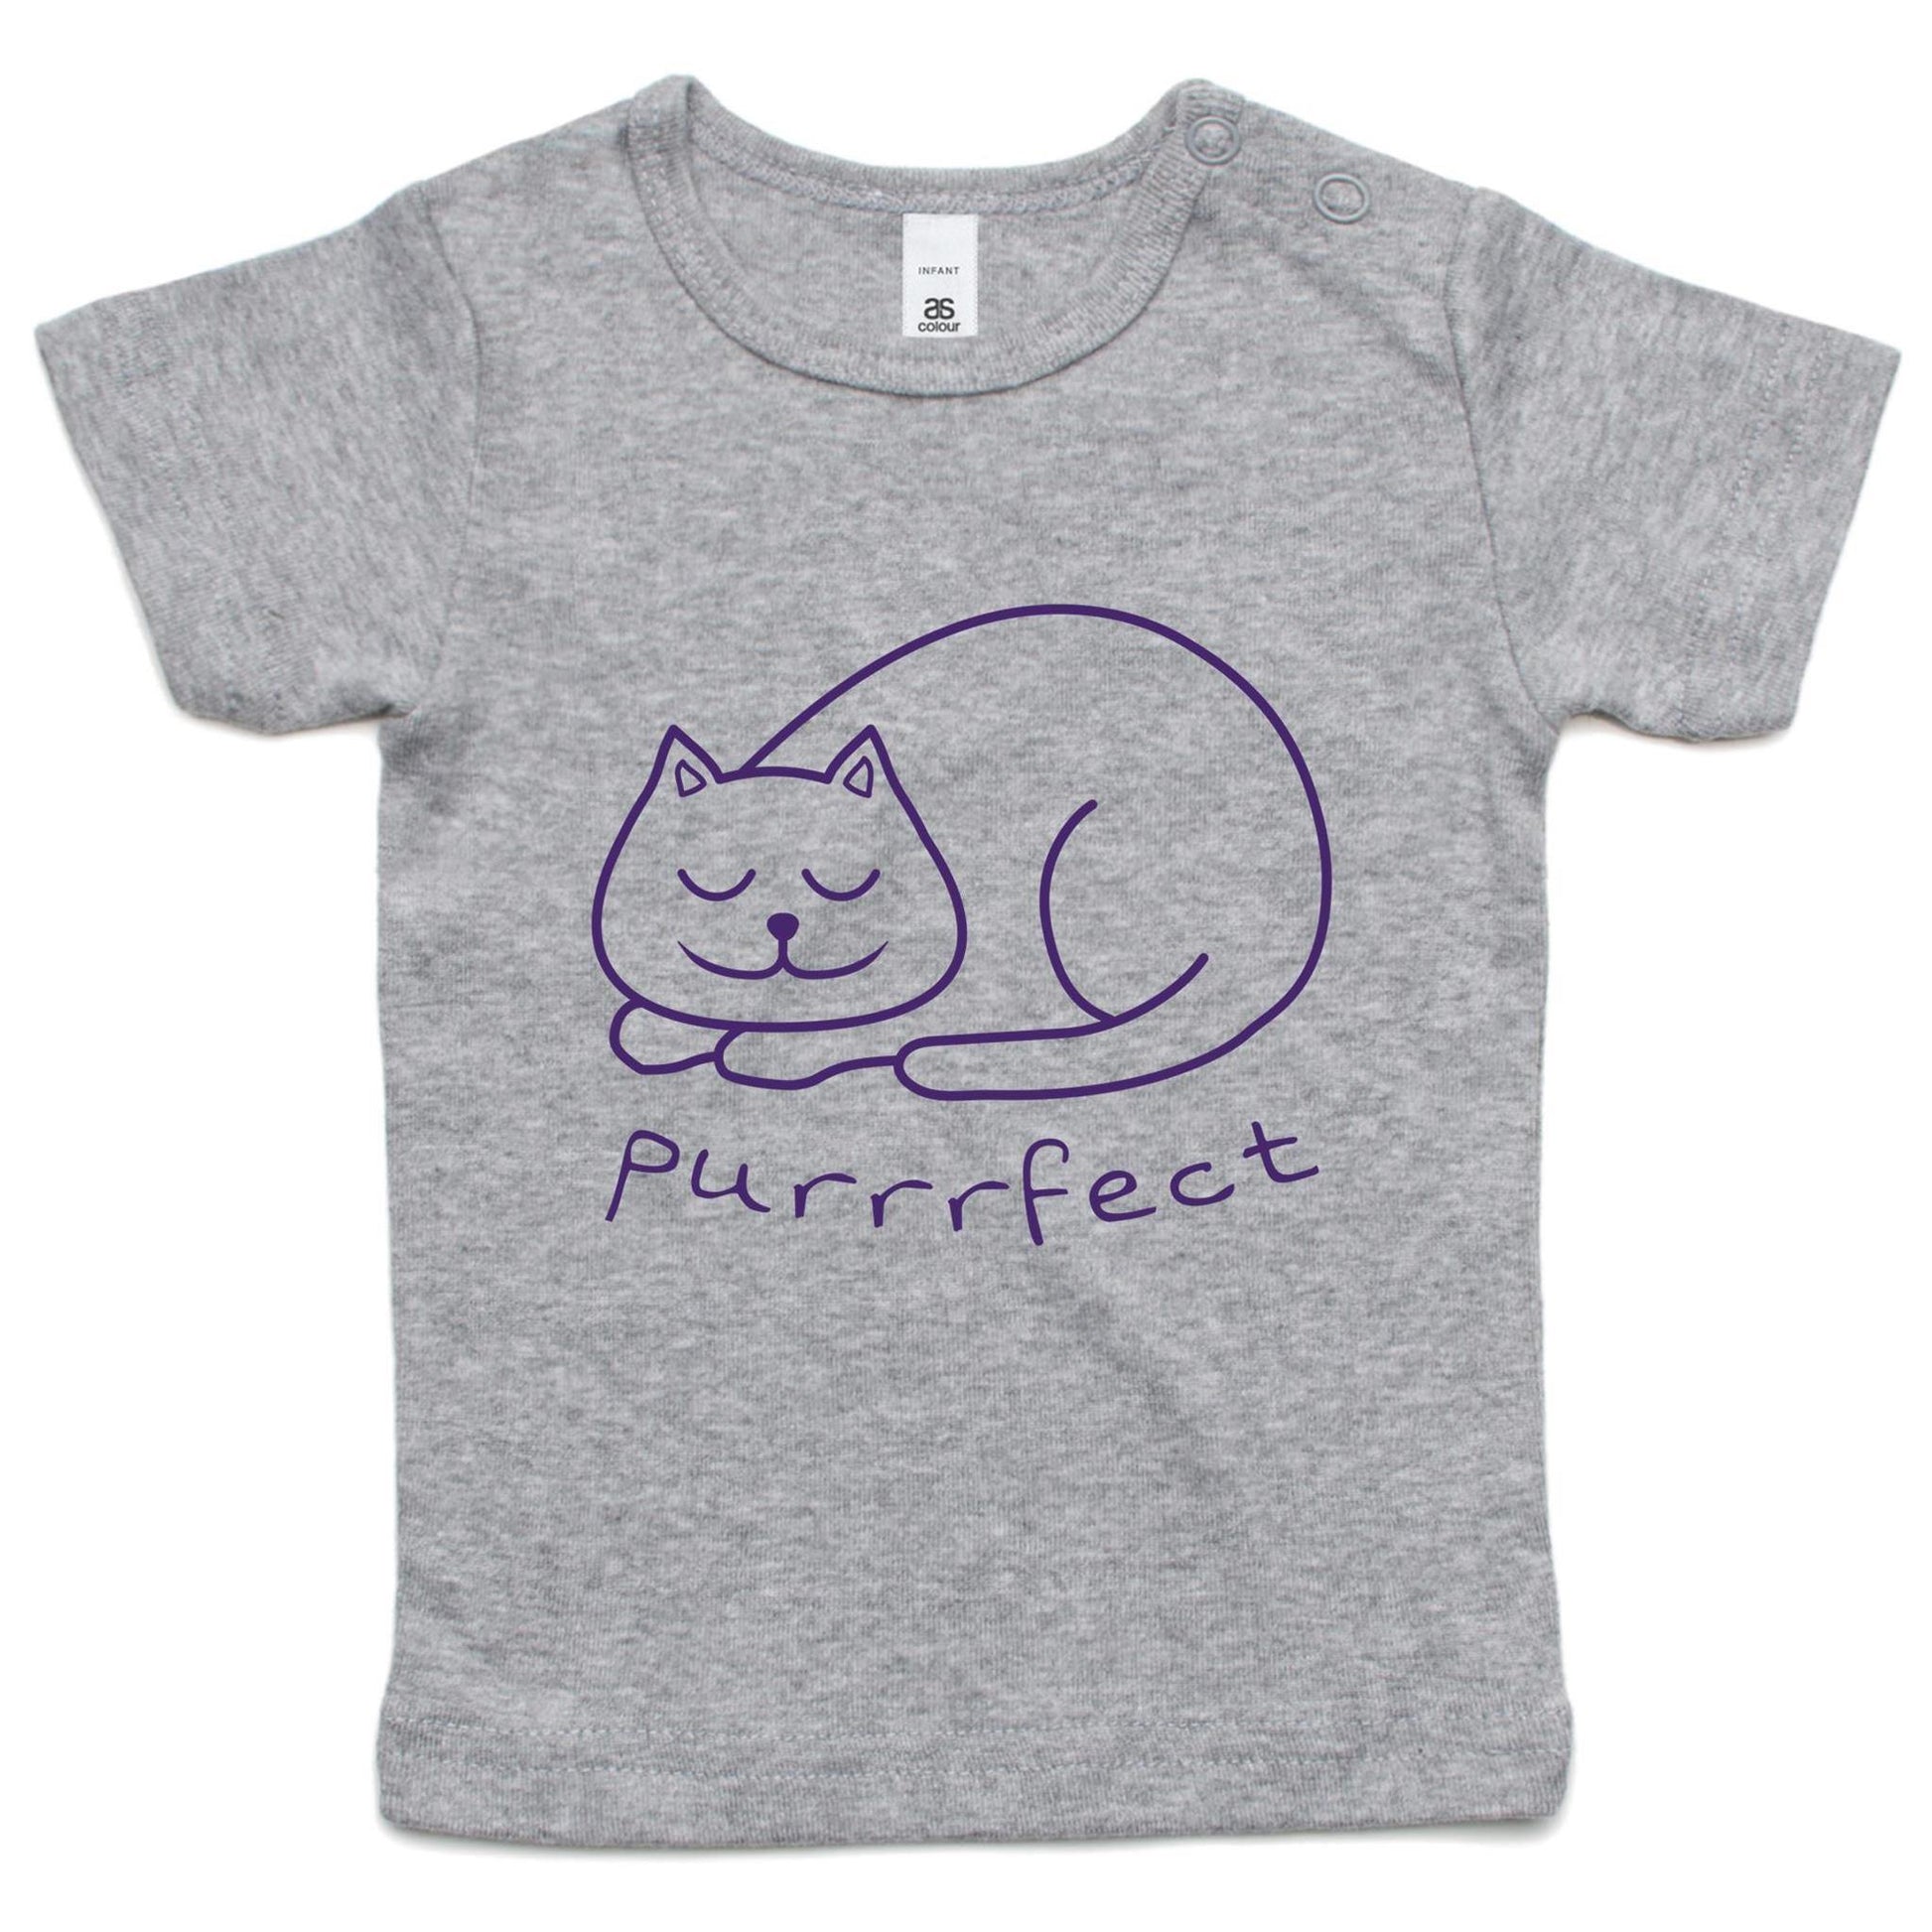 Purrrfect - Baby T-shirt Grey Marle Baby T-shirt animal kids